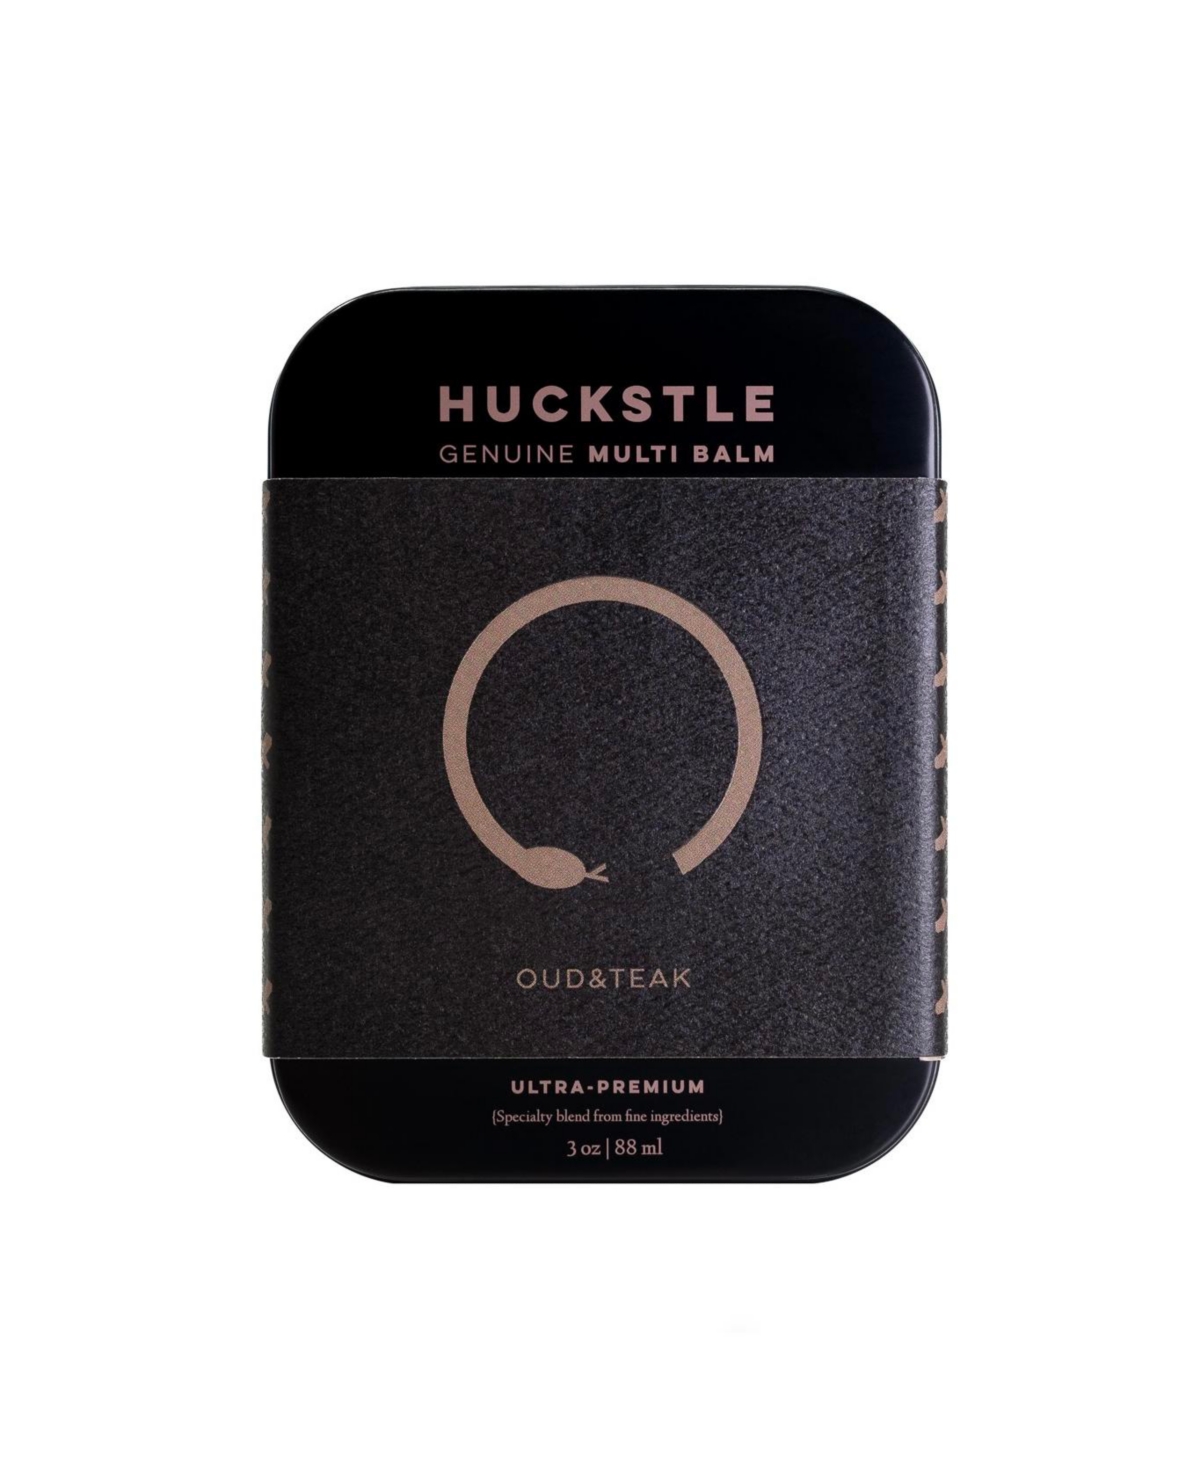 Huckstle Oud & Teak Multi-Balm- Premium Skin and Hair Conditioner, 3 oz